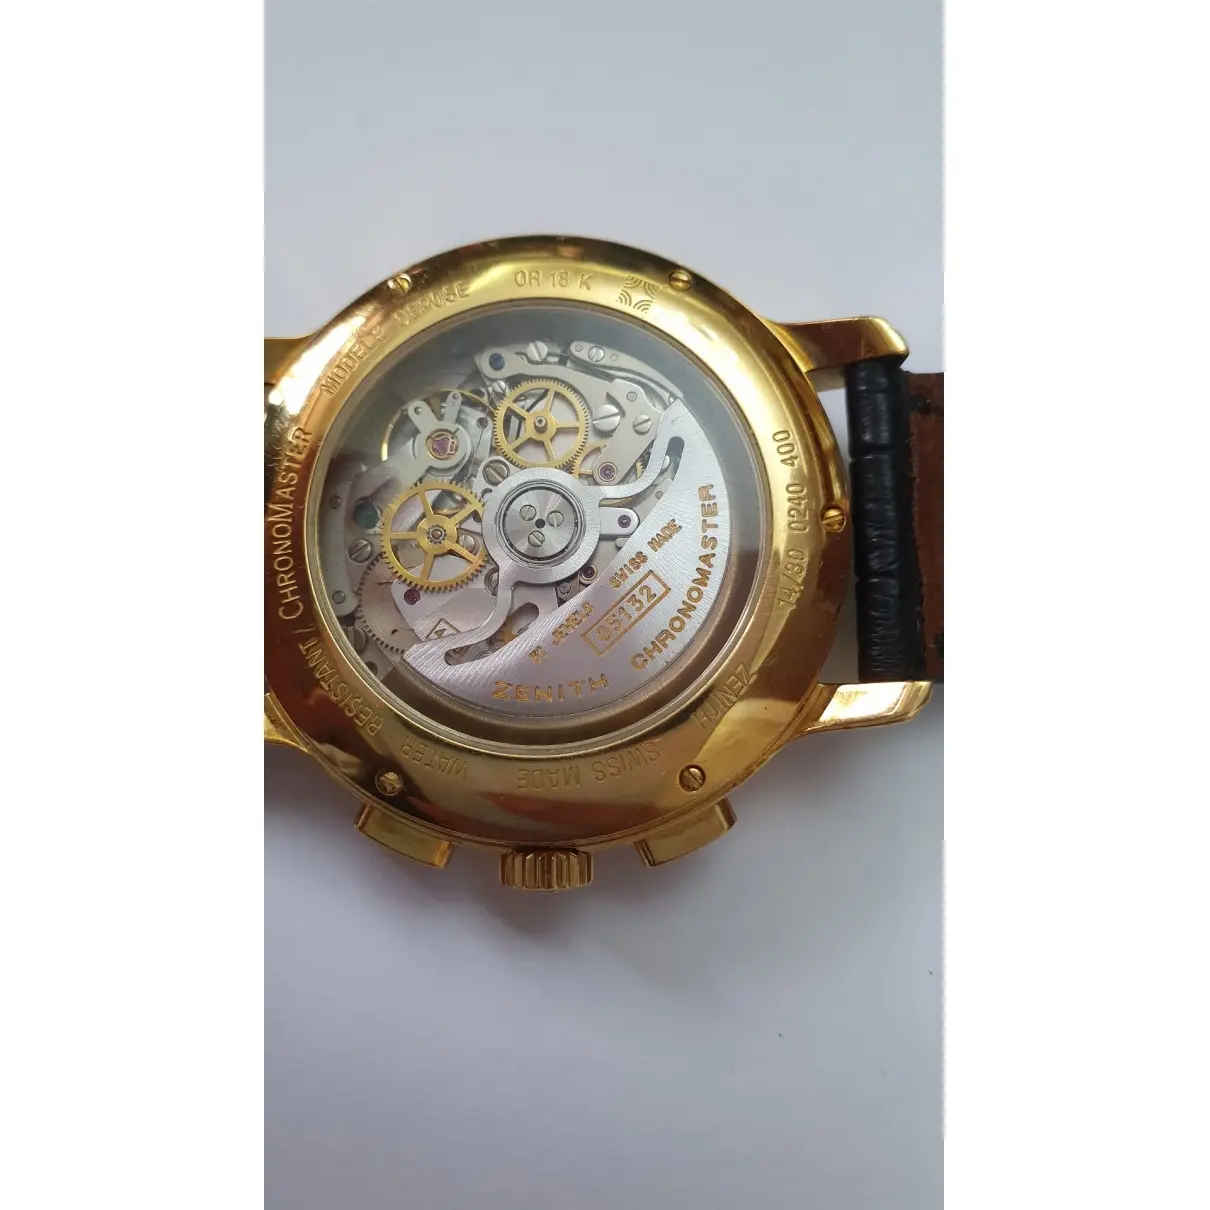 Zenith El Primero yellow gold watch for sale